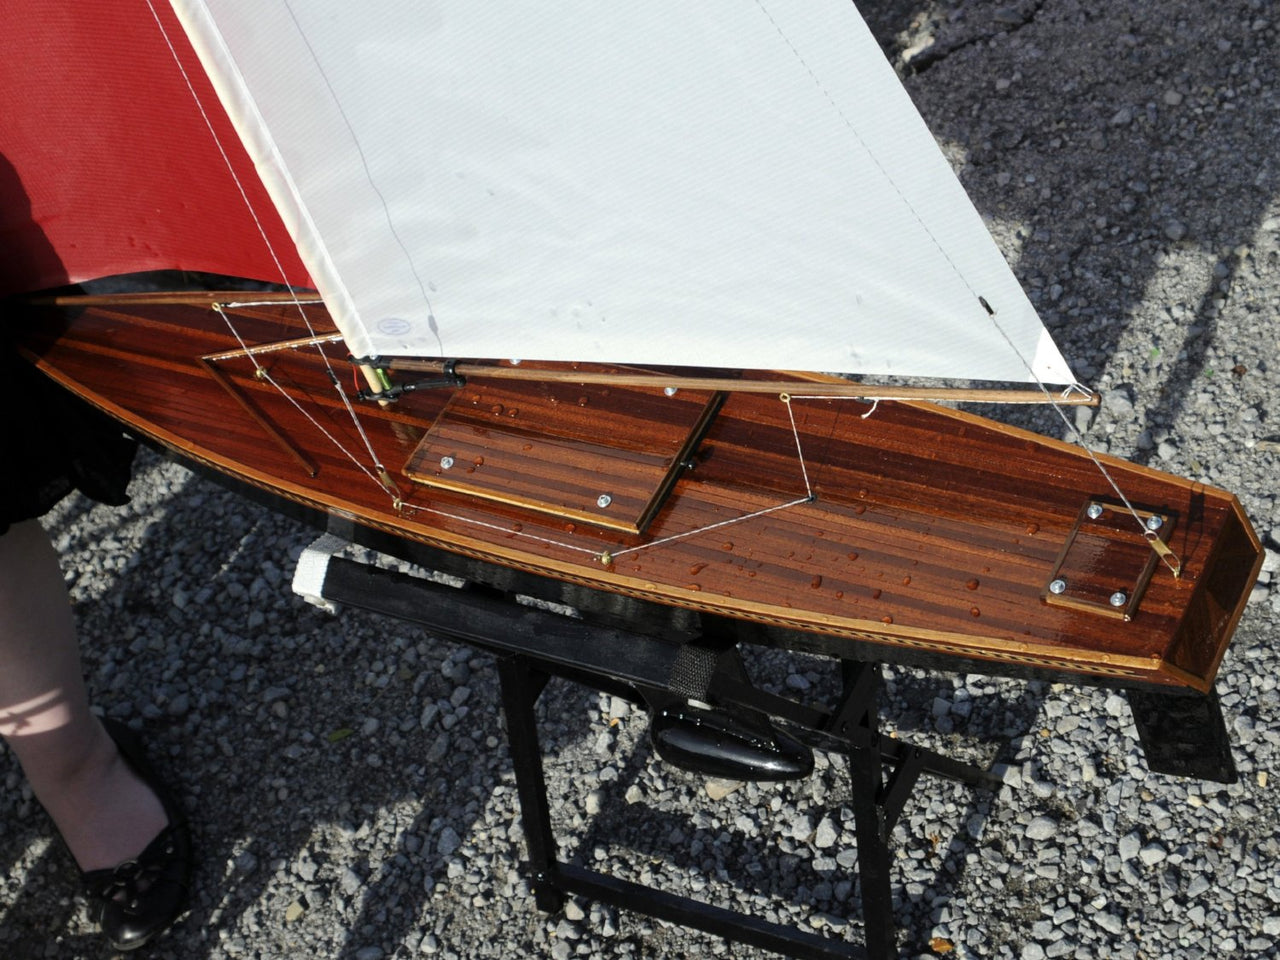 RC Sailboat Accessories: Veneer Deck Kit for T37 Wooden Model Boat